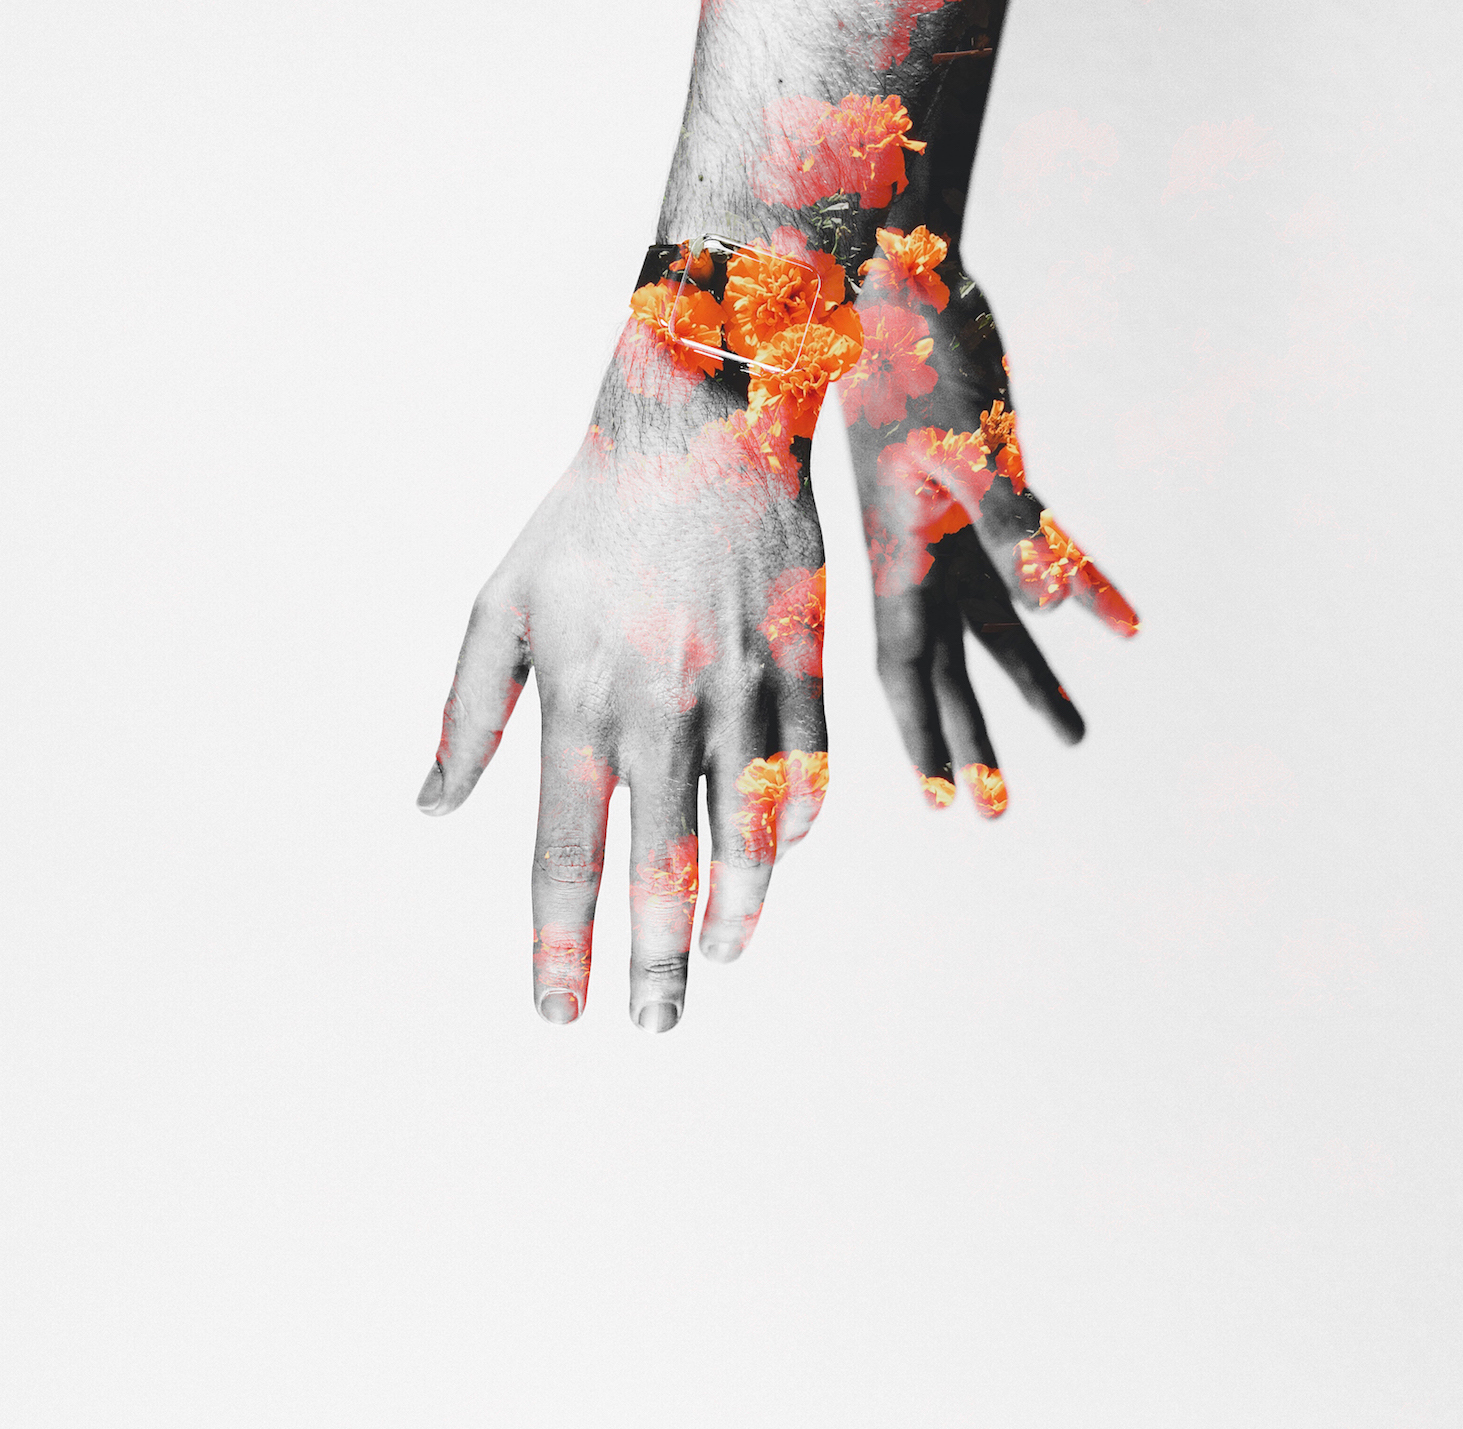 Flower hands.jpg